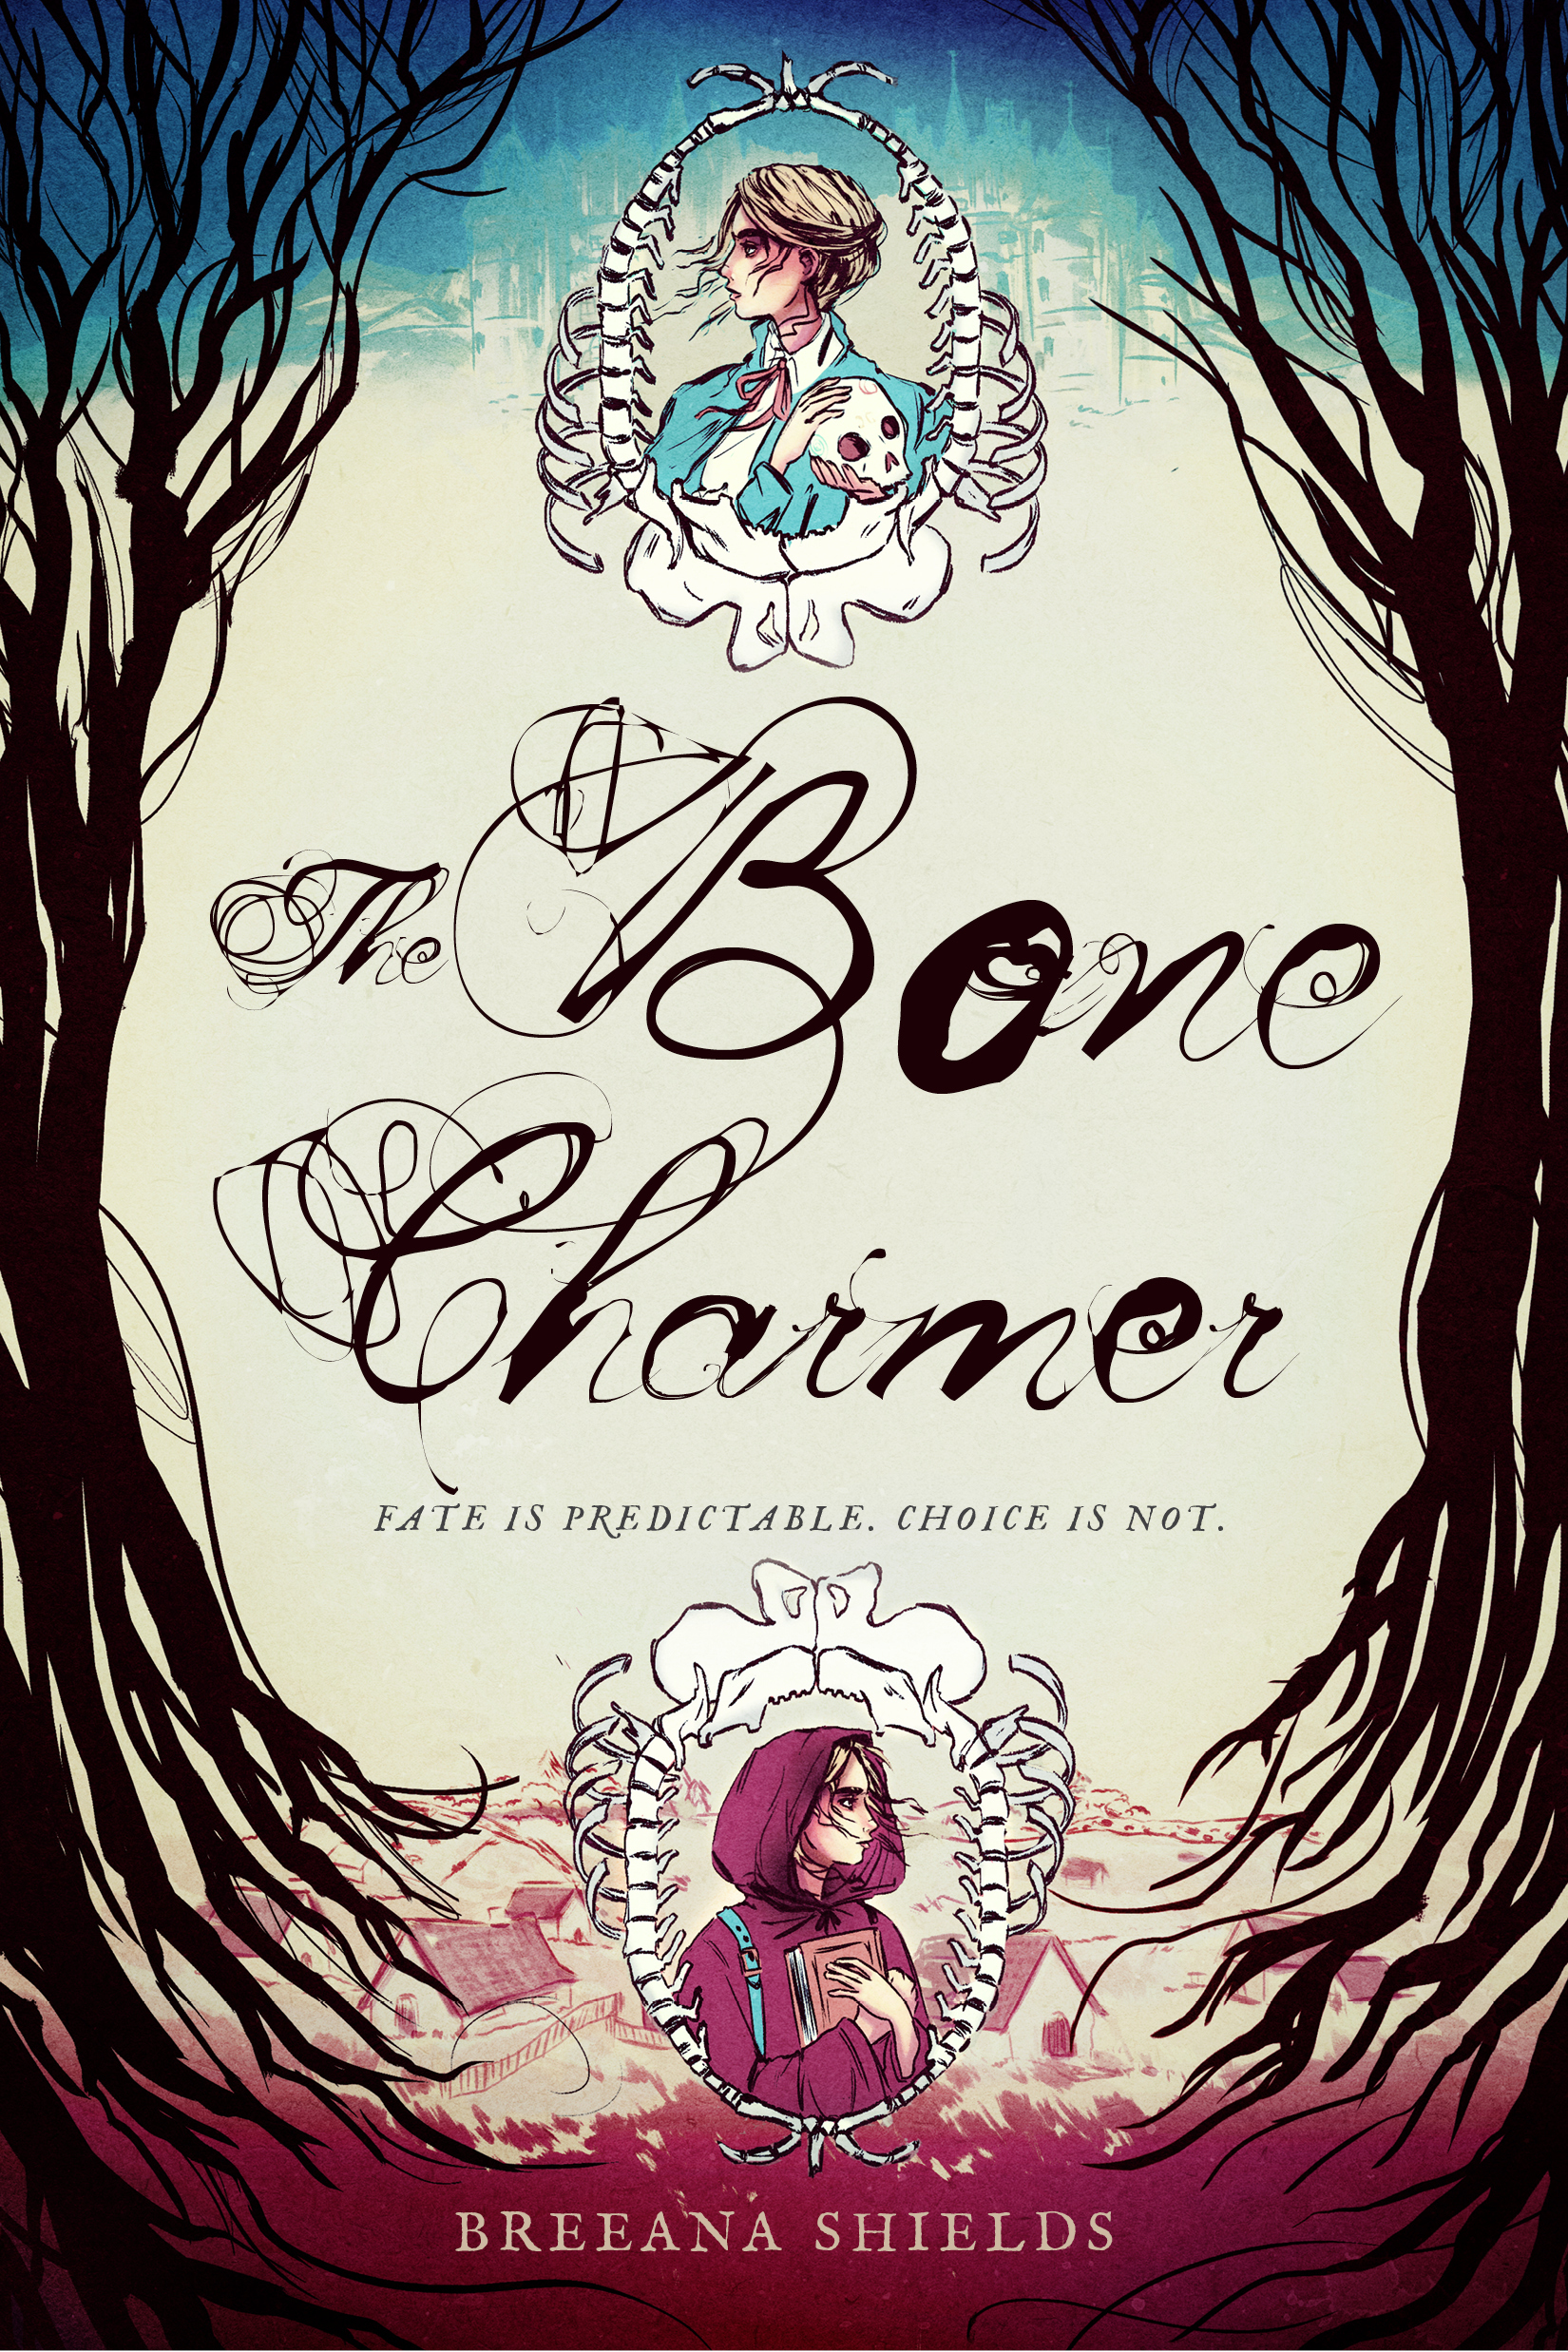 The Bone Charmer by Breeana Shields